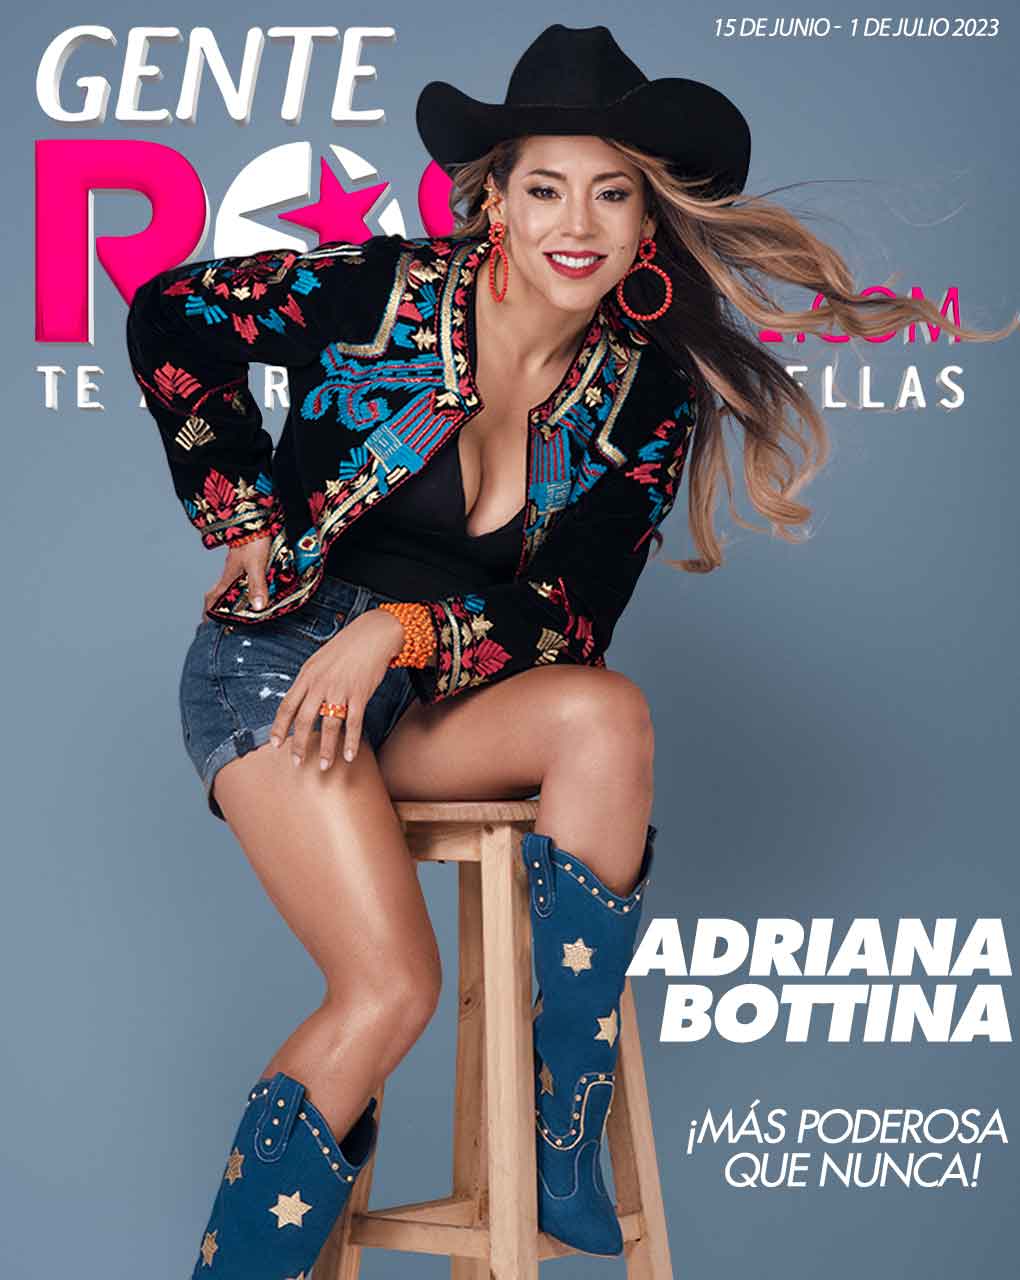 Adriana Bottina ¡más poderosa que nunca!